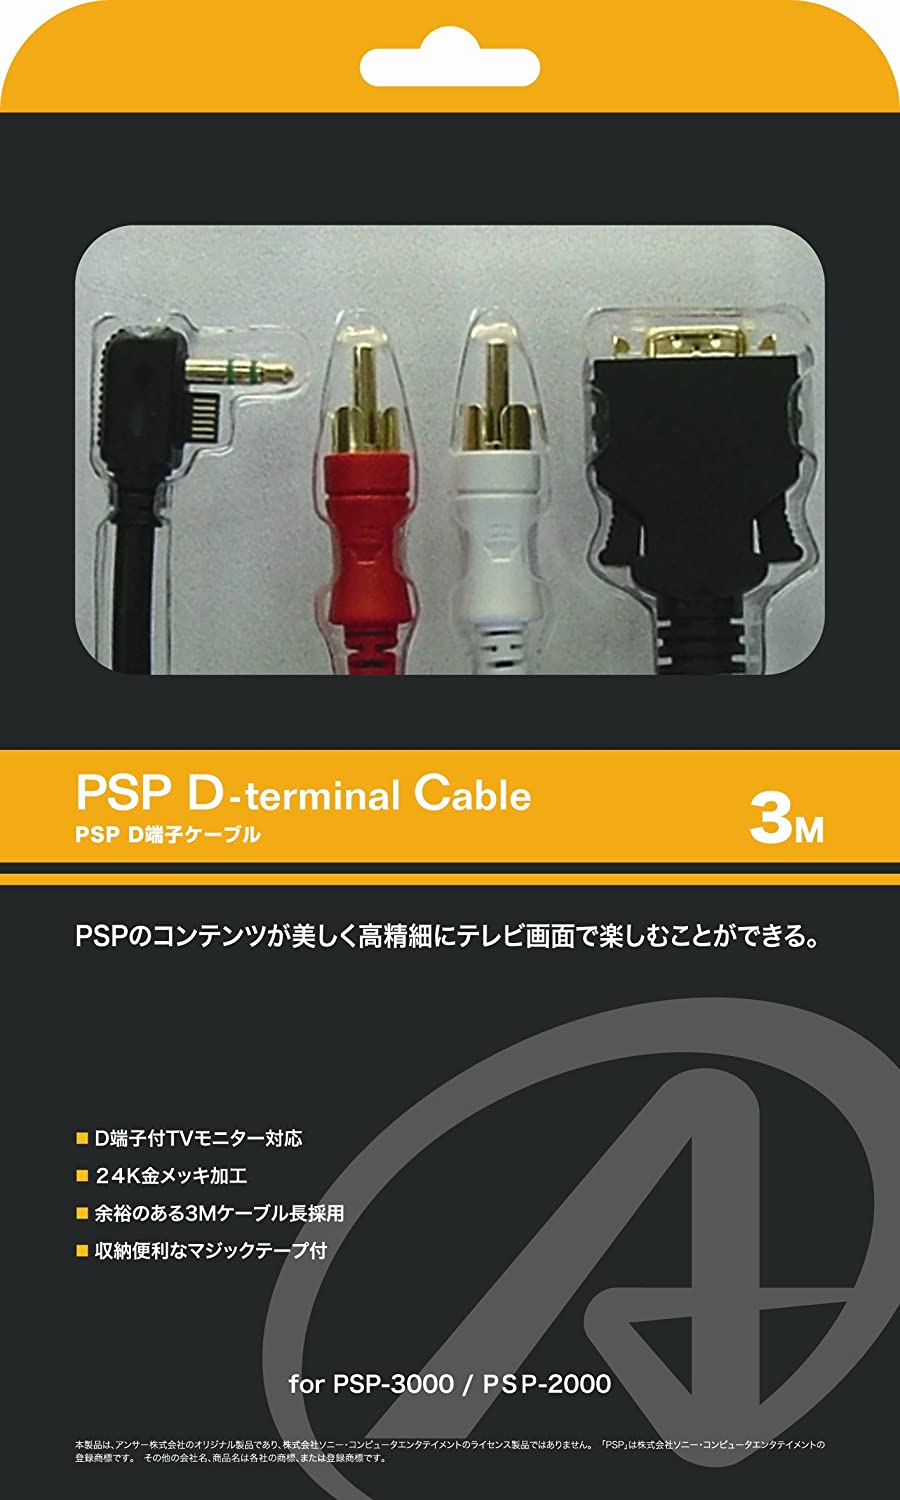 PSP PSP-2000 3000用接続ケーブル『PSP D端子ケーブル 3M』 アンサー